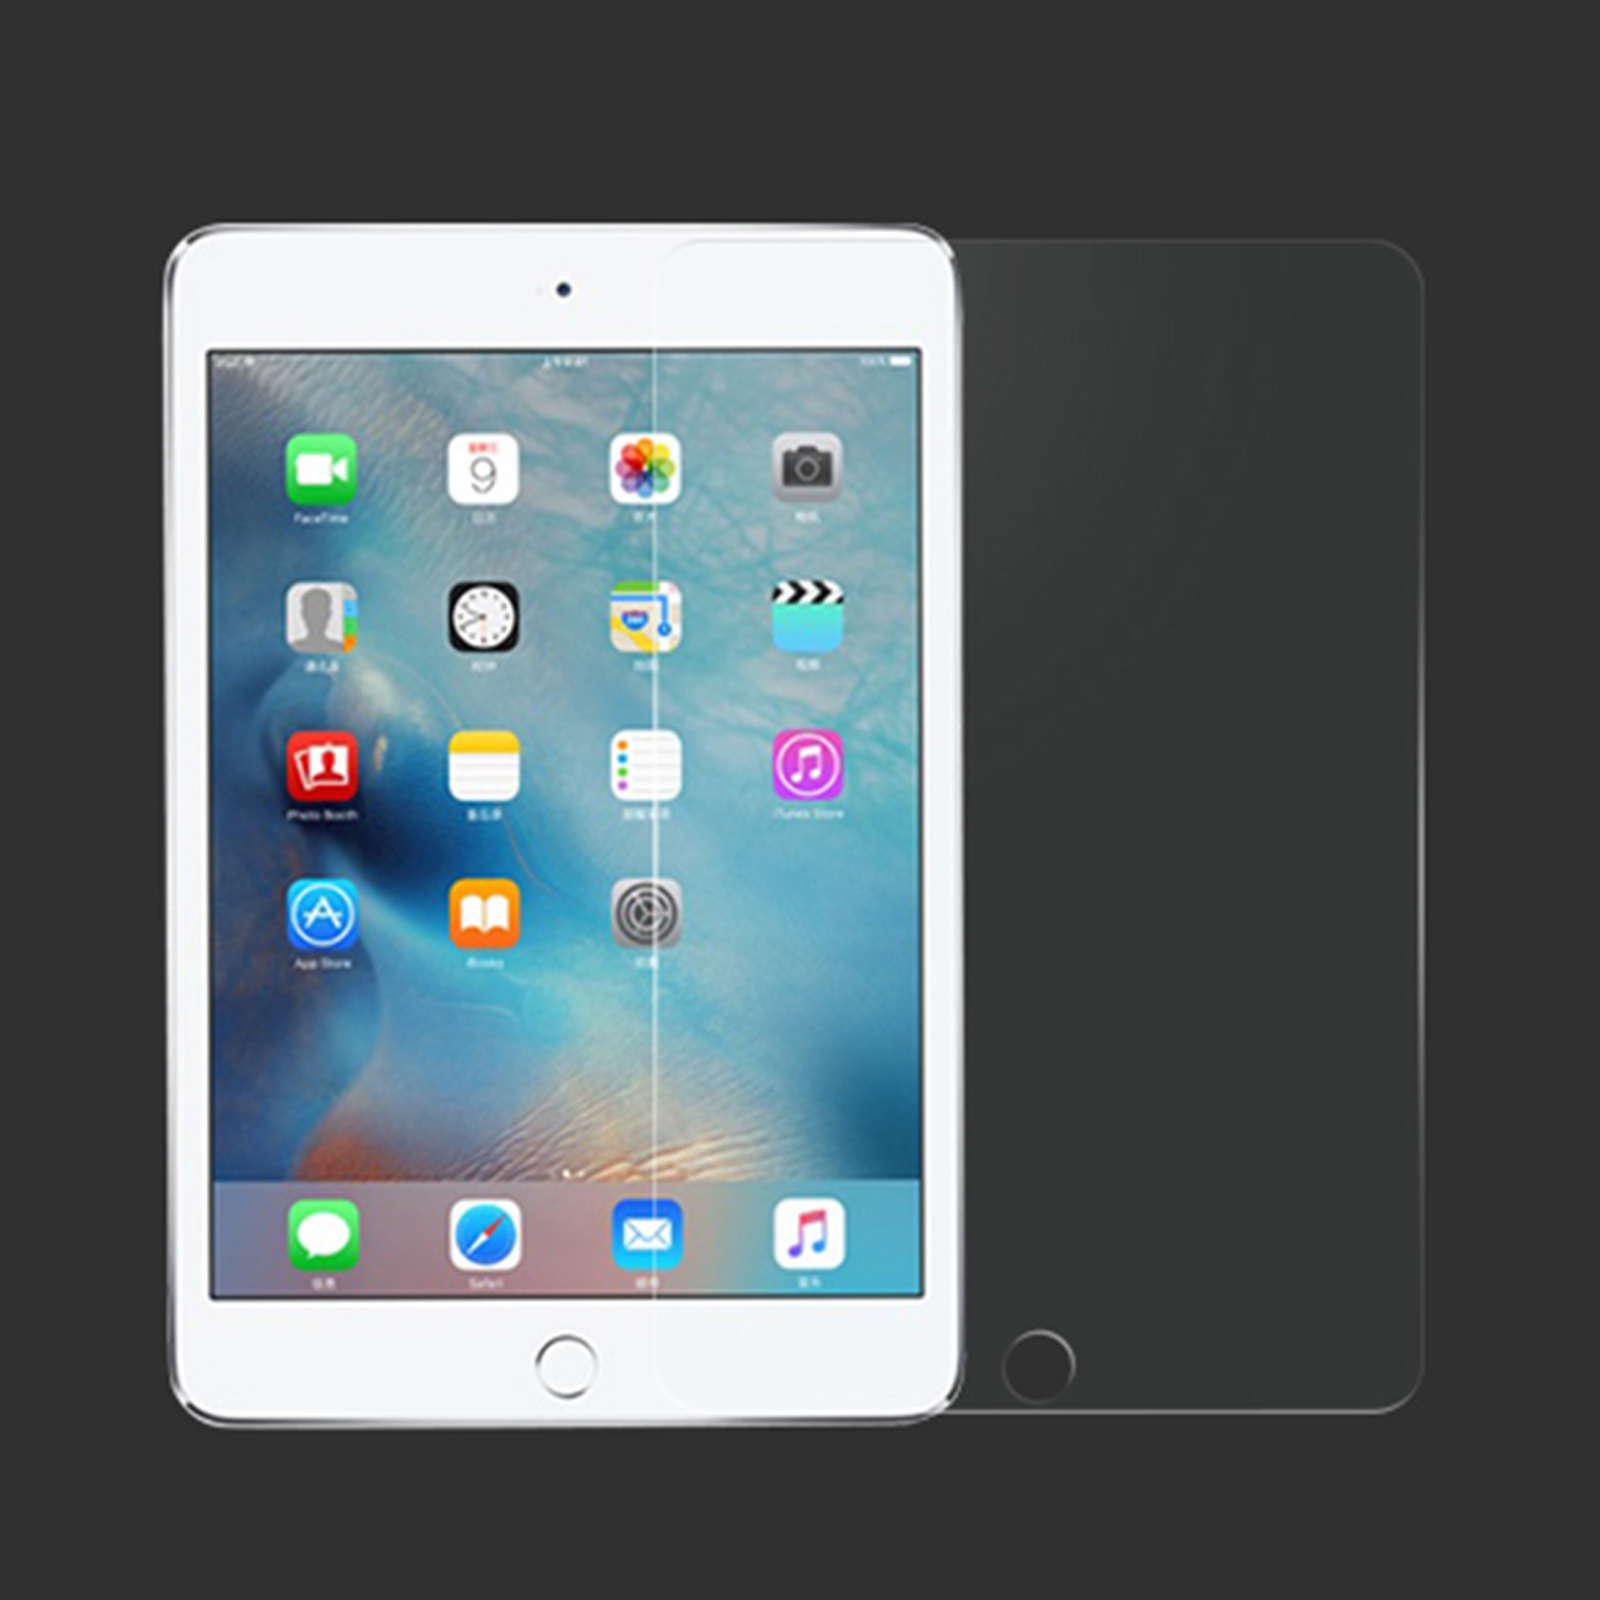 Gesila [COD จัดส่งฟรี] ขายร้อนสำหรับ Apple iPad 2 3 4 ป้องกันการระเบิดป้องกันป่นปี้กระจกนิรภัยพรีเมี่ยมป้องกันหน้าจอ HD กระจกฟิล์มป้องกันฟิล์มแก้ว